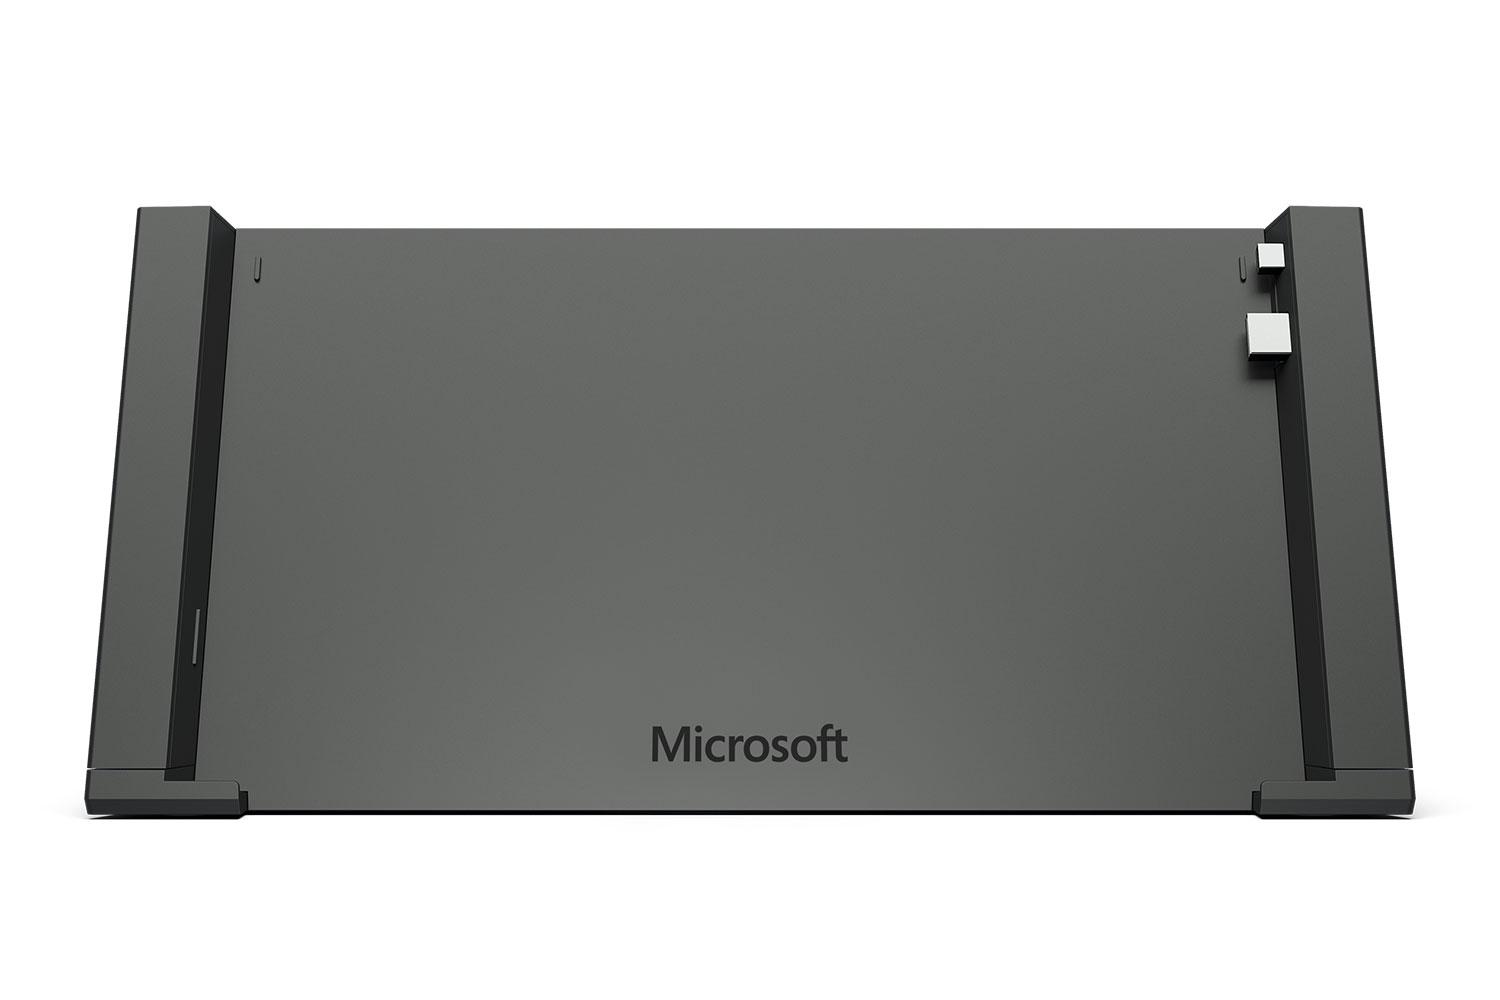 Microsoft Surface 3 dock